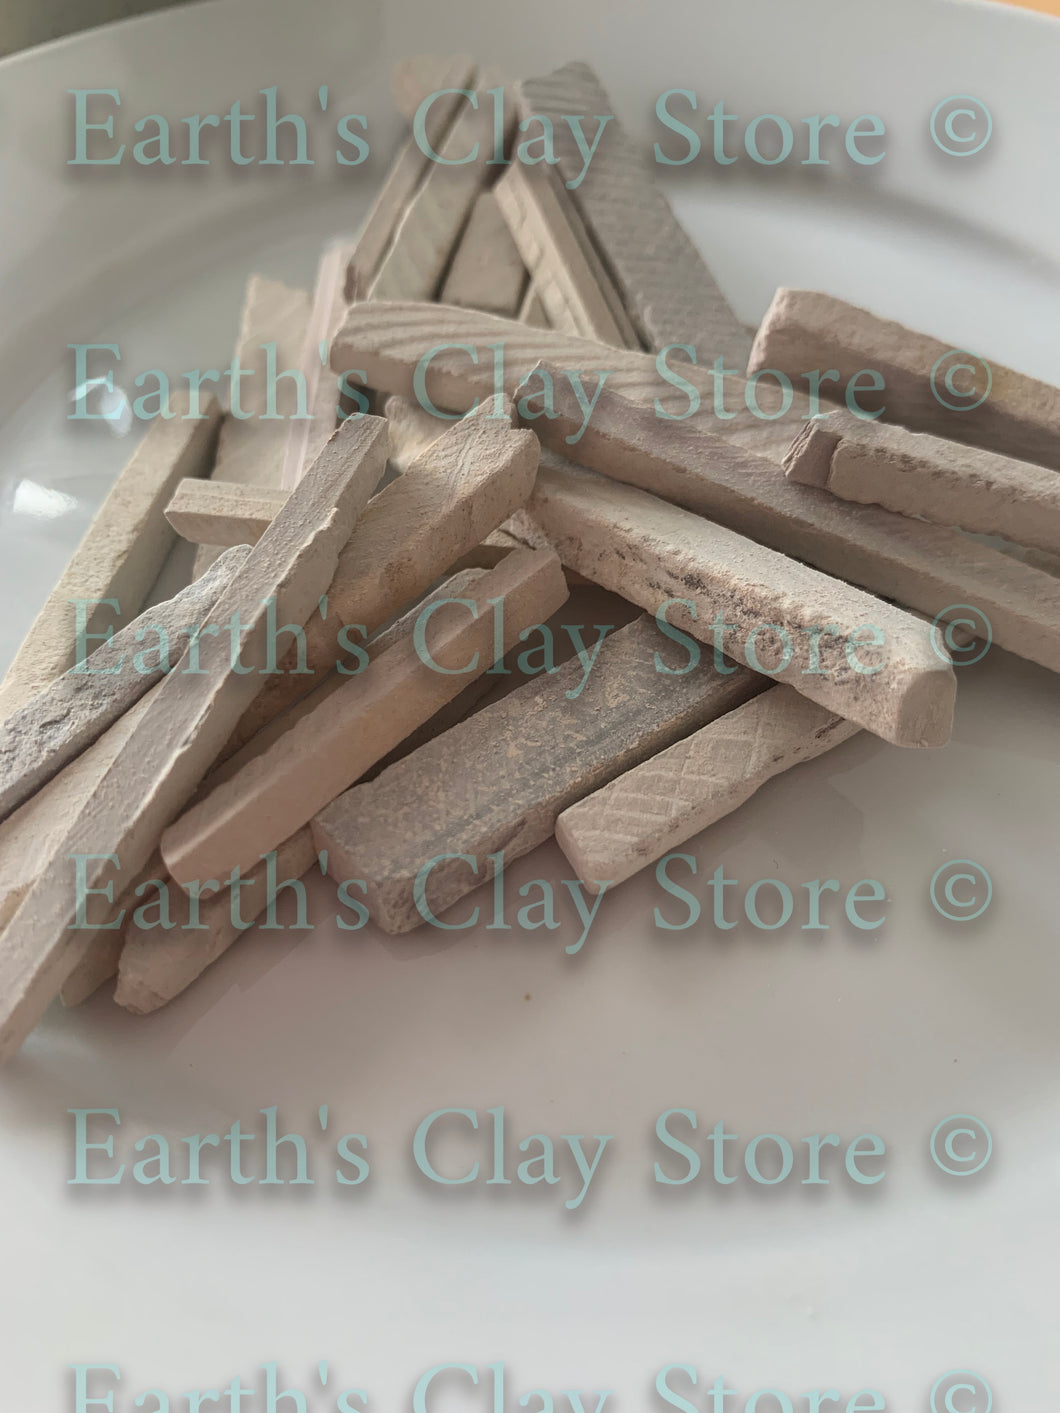 Mixed Slates (Pencils, Bars, Blocks or Shale Slates) – Earth's